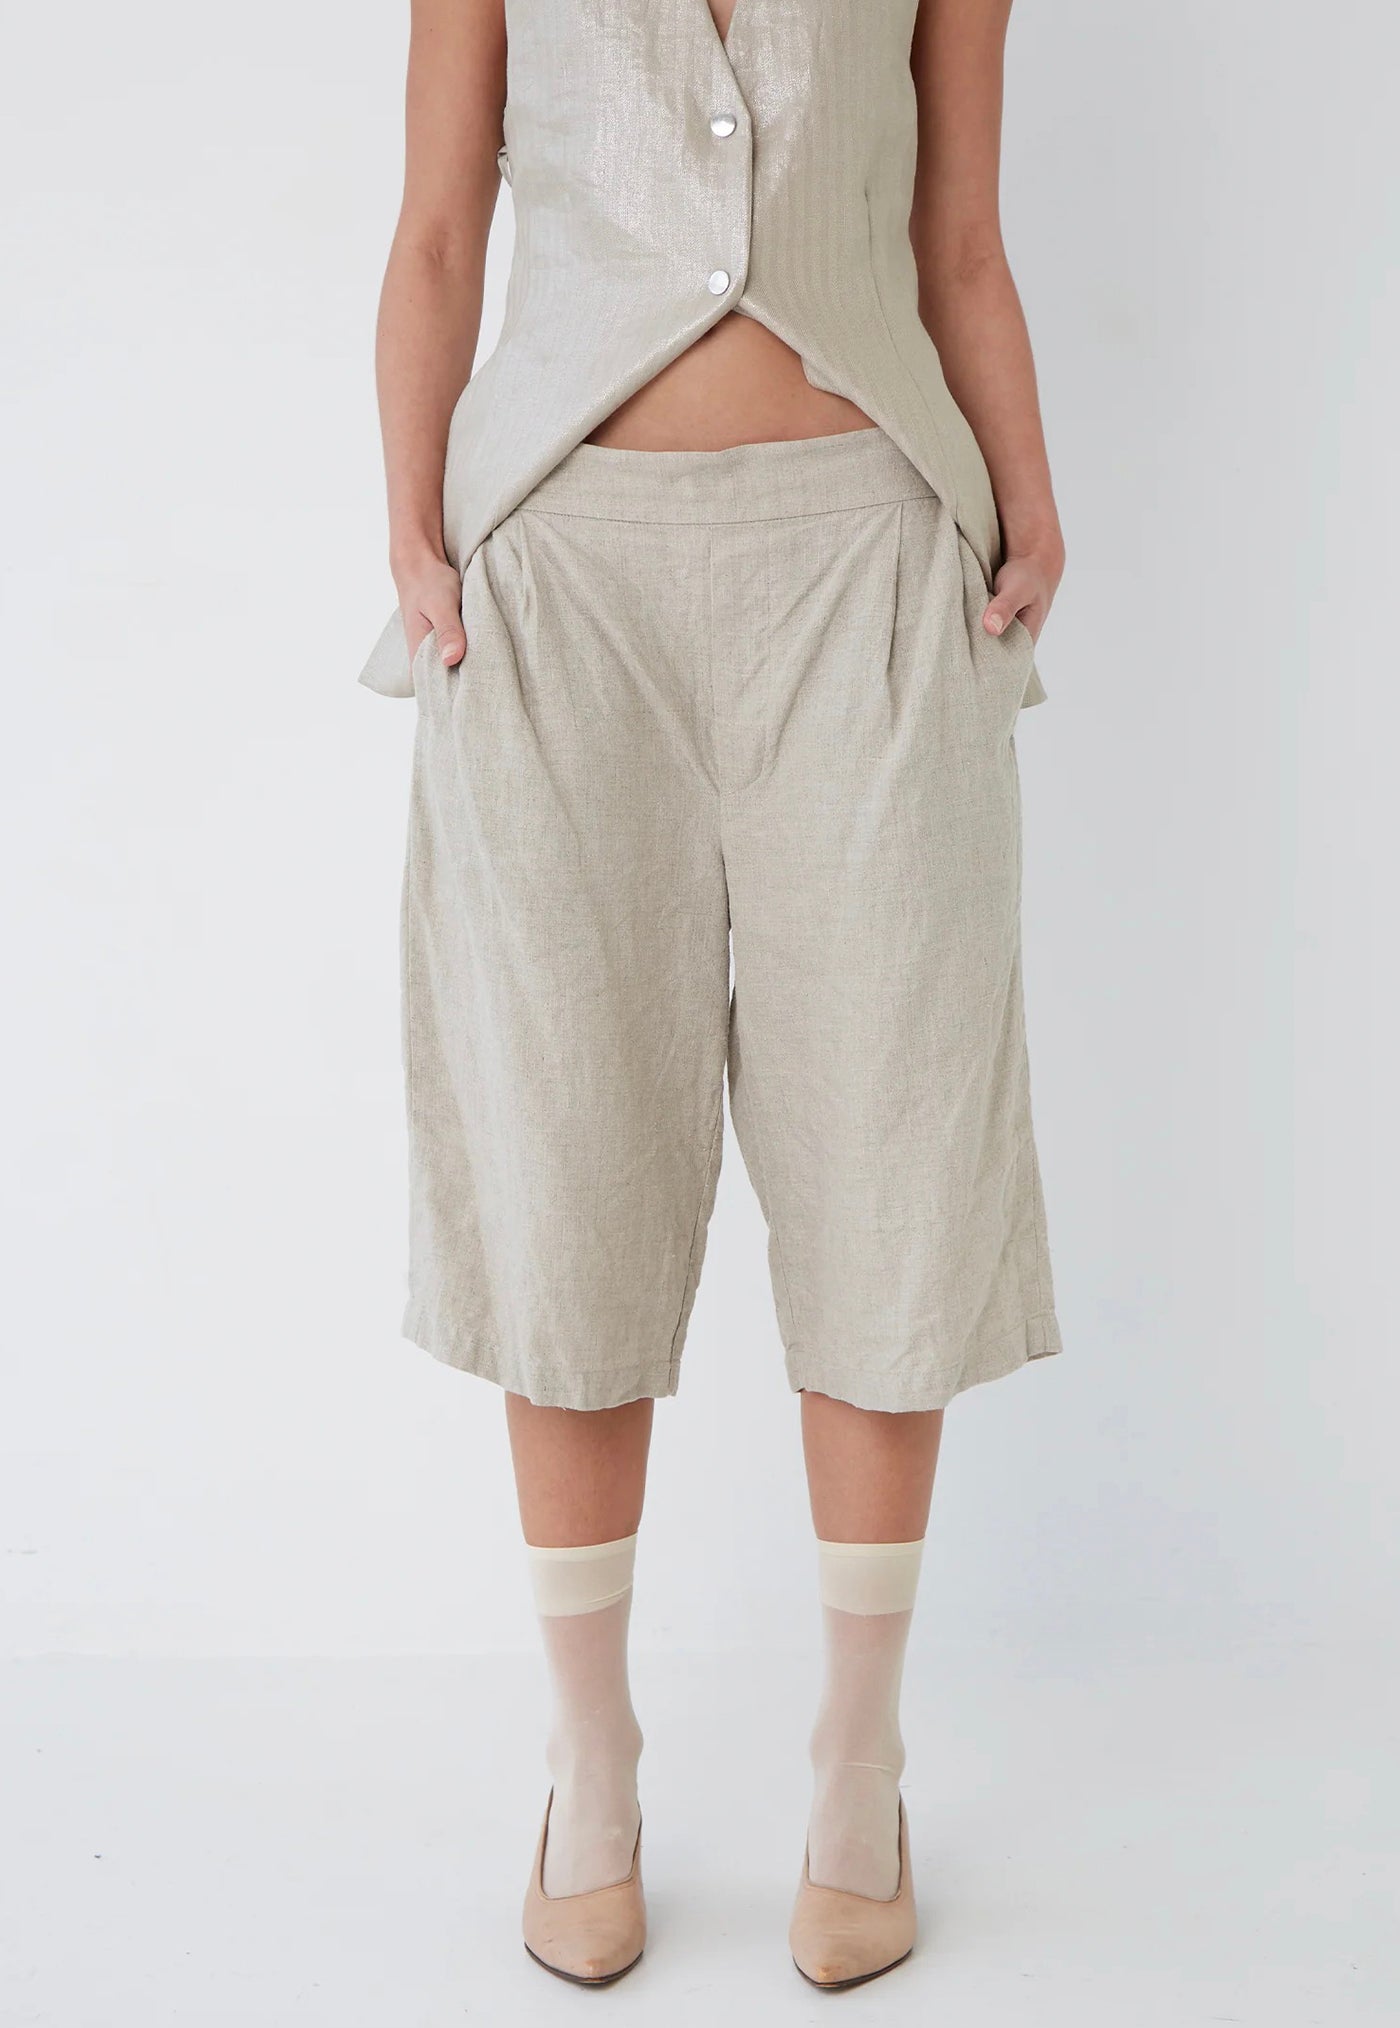 Lax Shorts - Hemp sold by Angel Divine